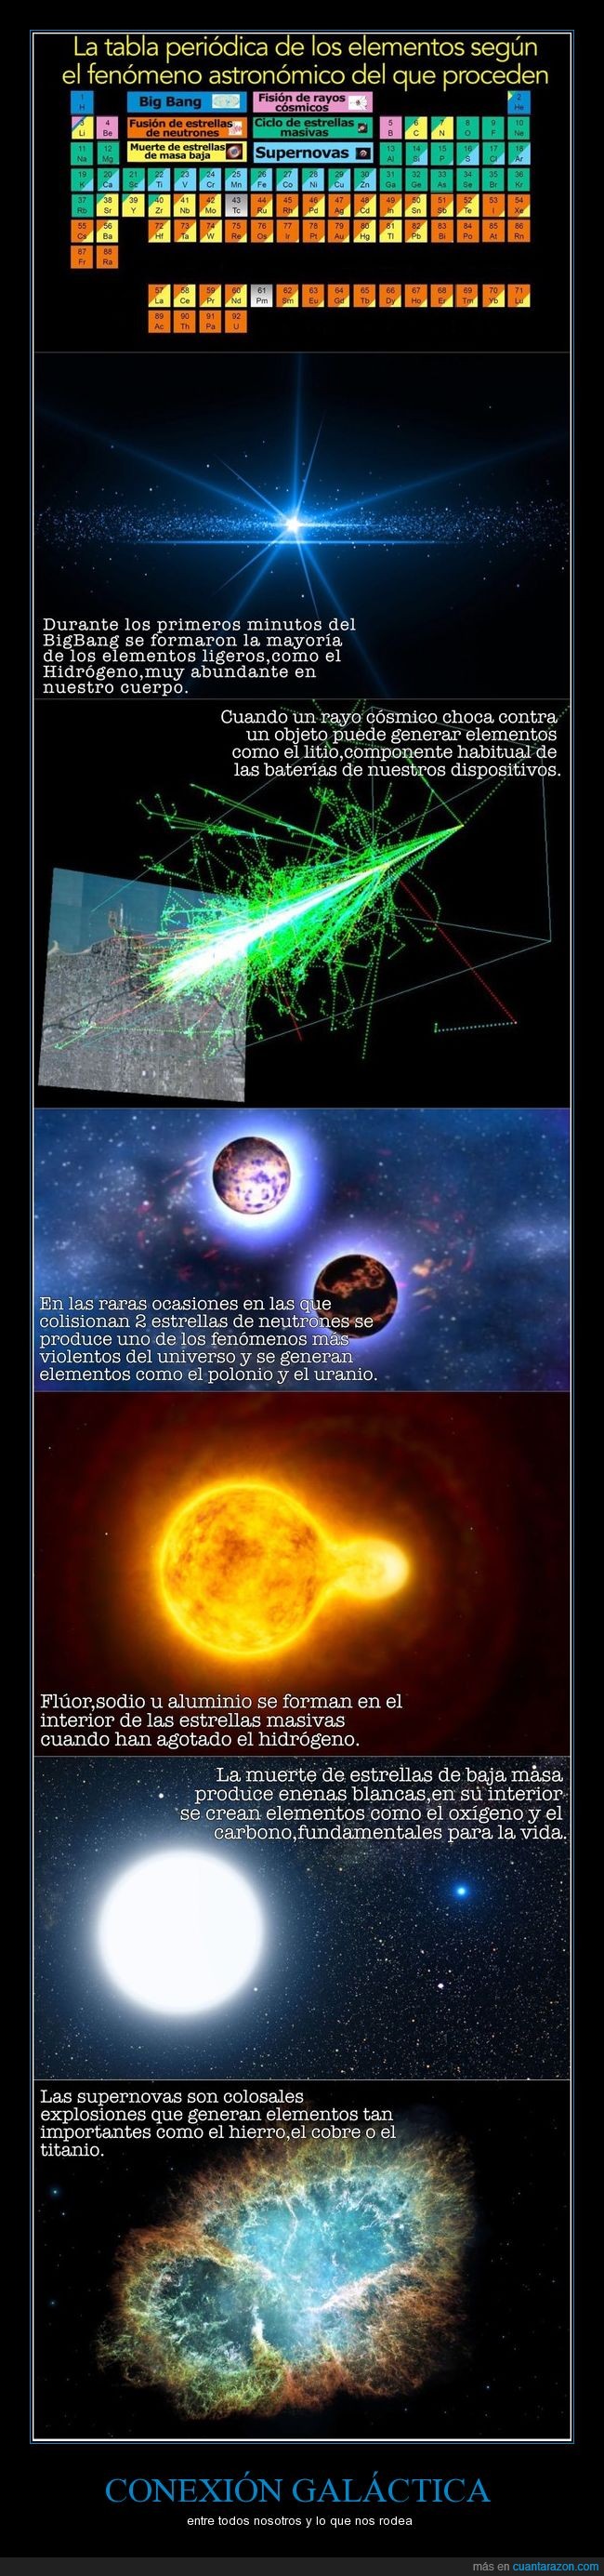 Estrellas,universo,elementos,supernova